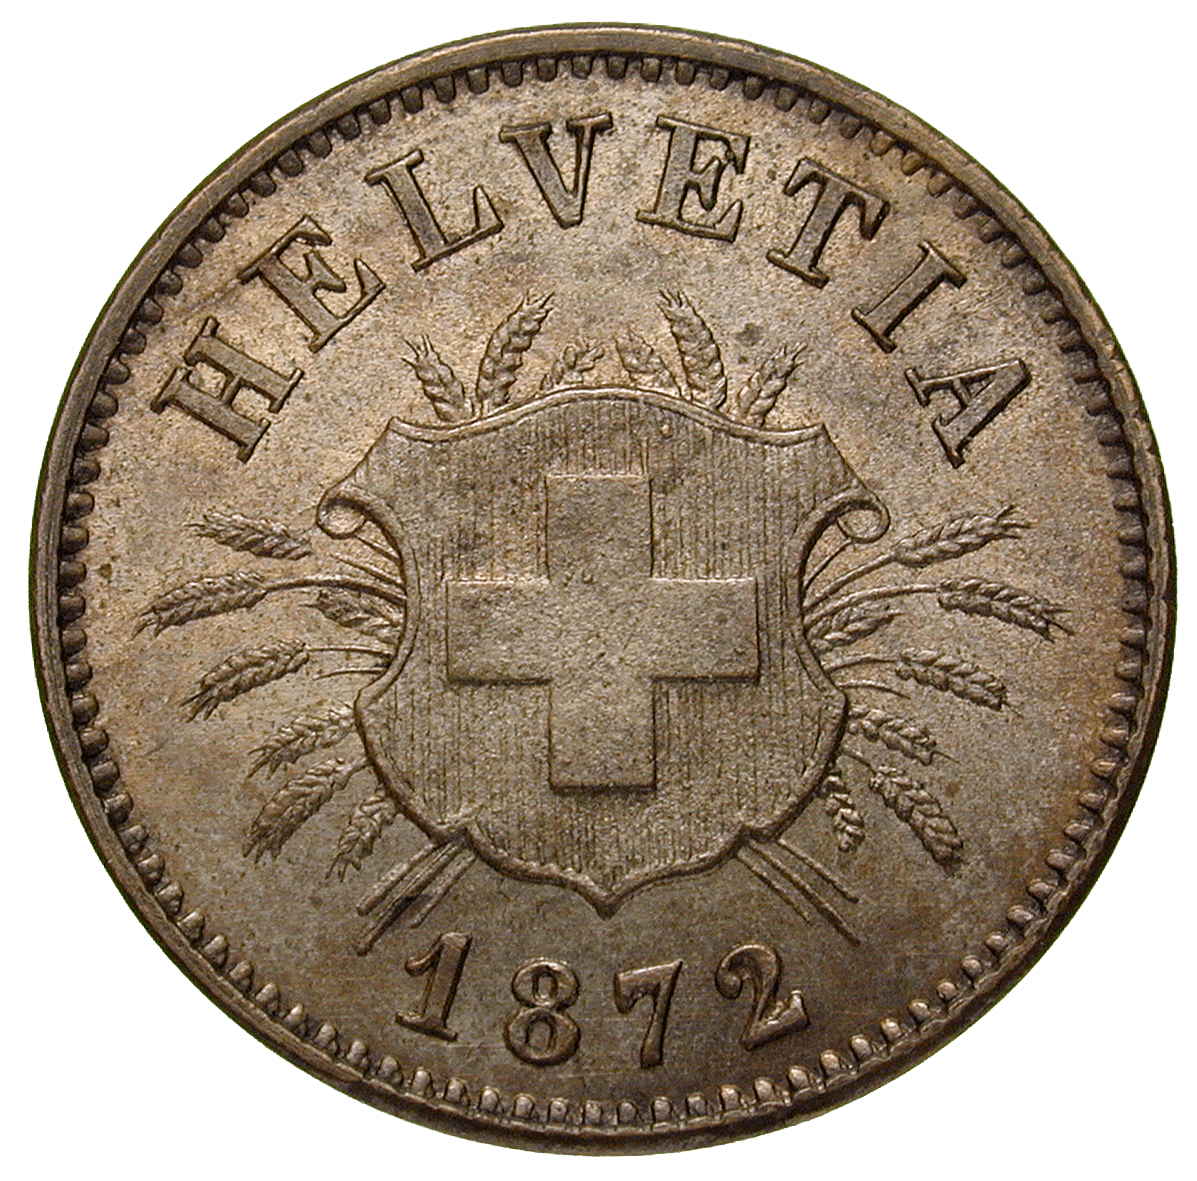 Swiss Confederation, 5 Rappen 1872 (obverse)